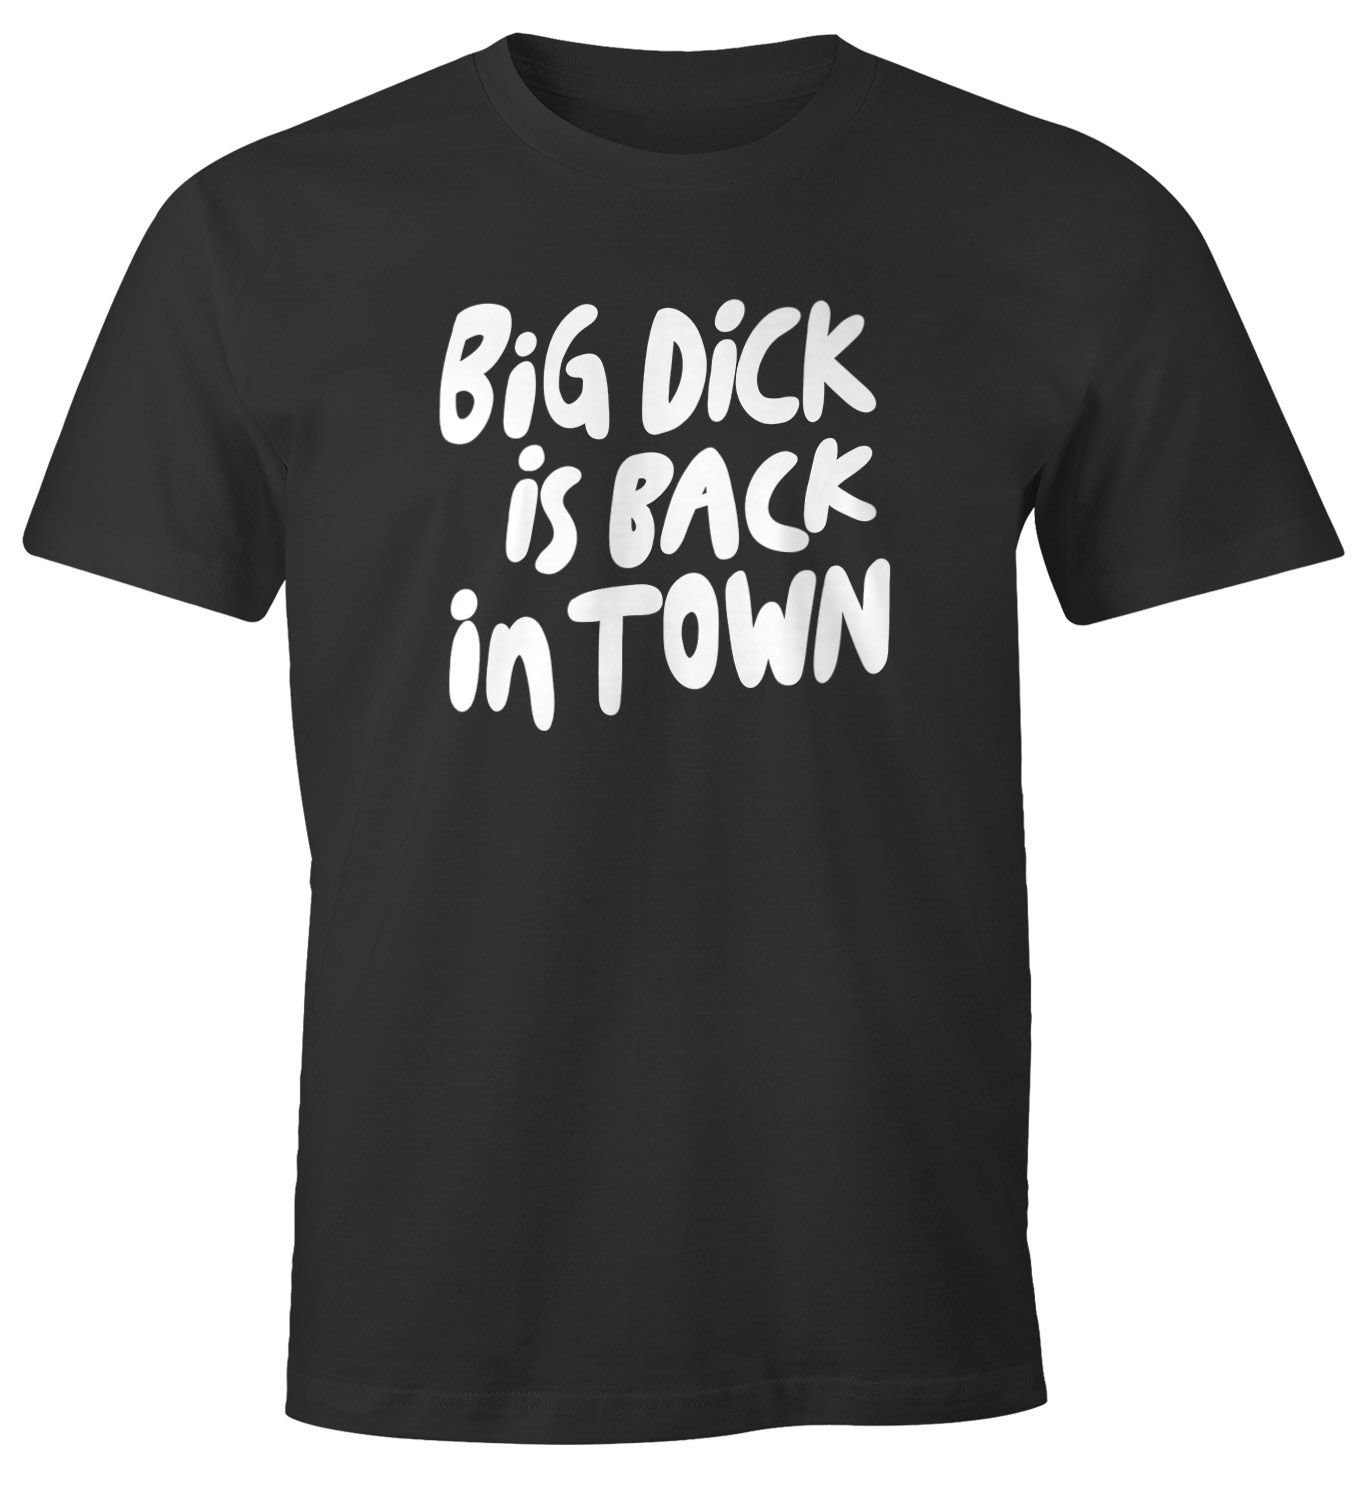 MoonWorks Print-Shirt Herren mit Ironie in mit Print Moonworks® Fun-Shirt Spruch schwarz back Big lustig T-Shirt Town is Dick